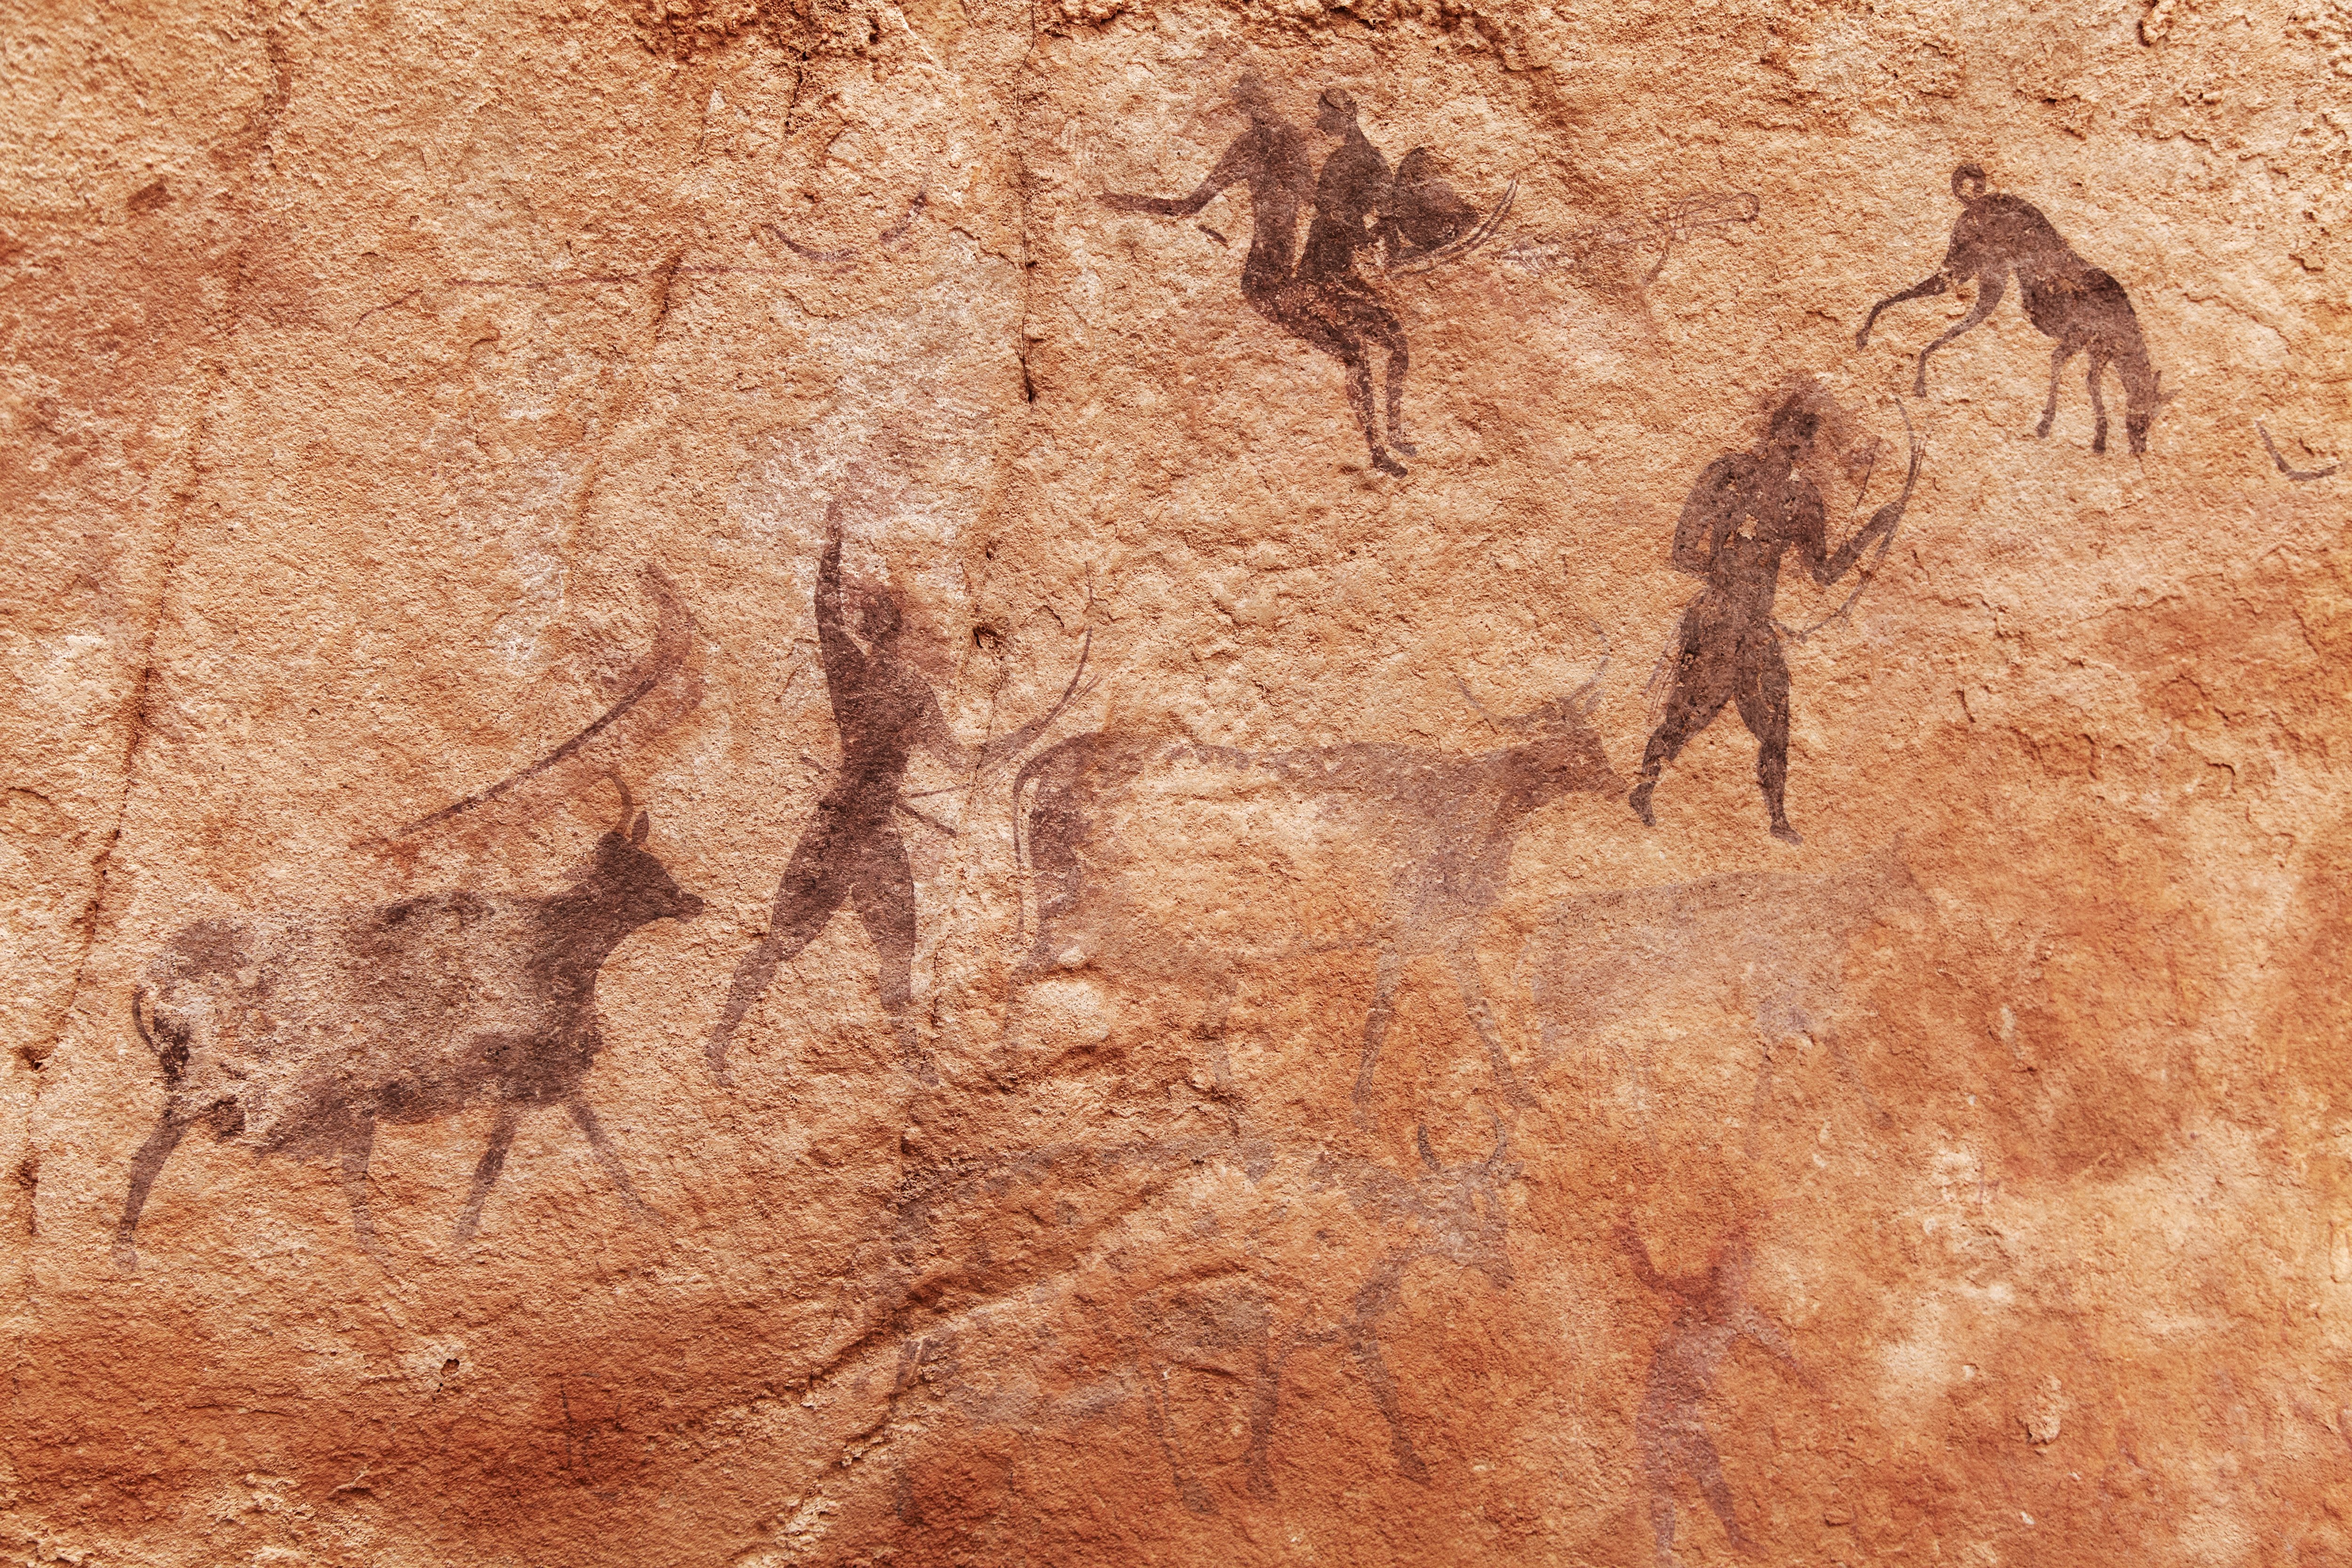 Cave art depicting human and animal husbandry